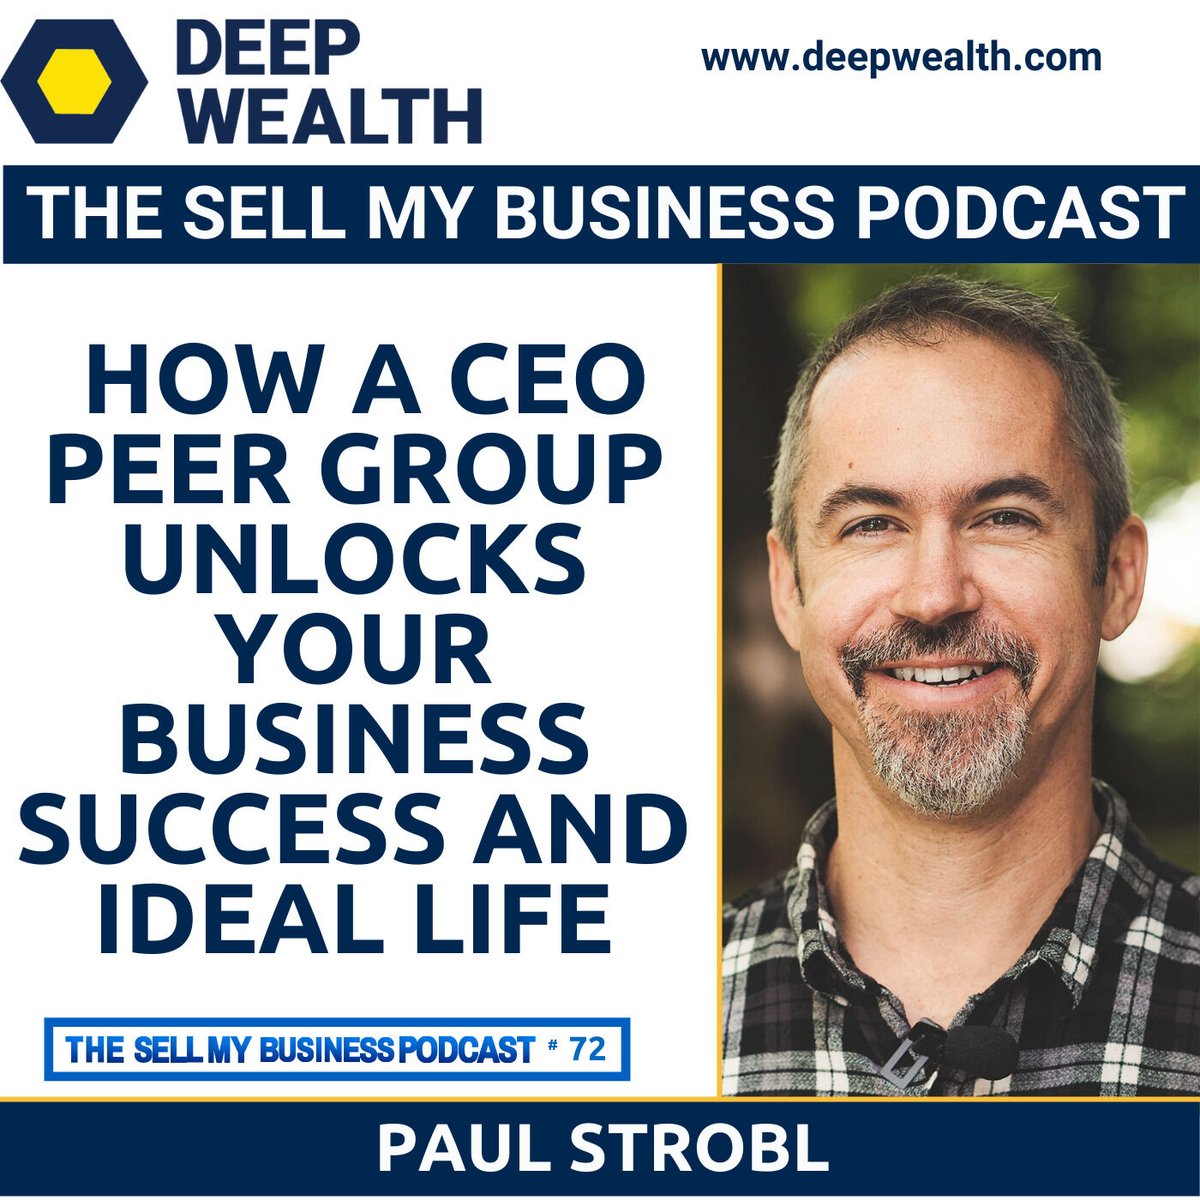 Paul Strobl Reveals How A CEO Peer Group Unlocks Your Business Success And Ideal Life (#72) iapdw.com/307 #DeepWealth #BusinessSuccess